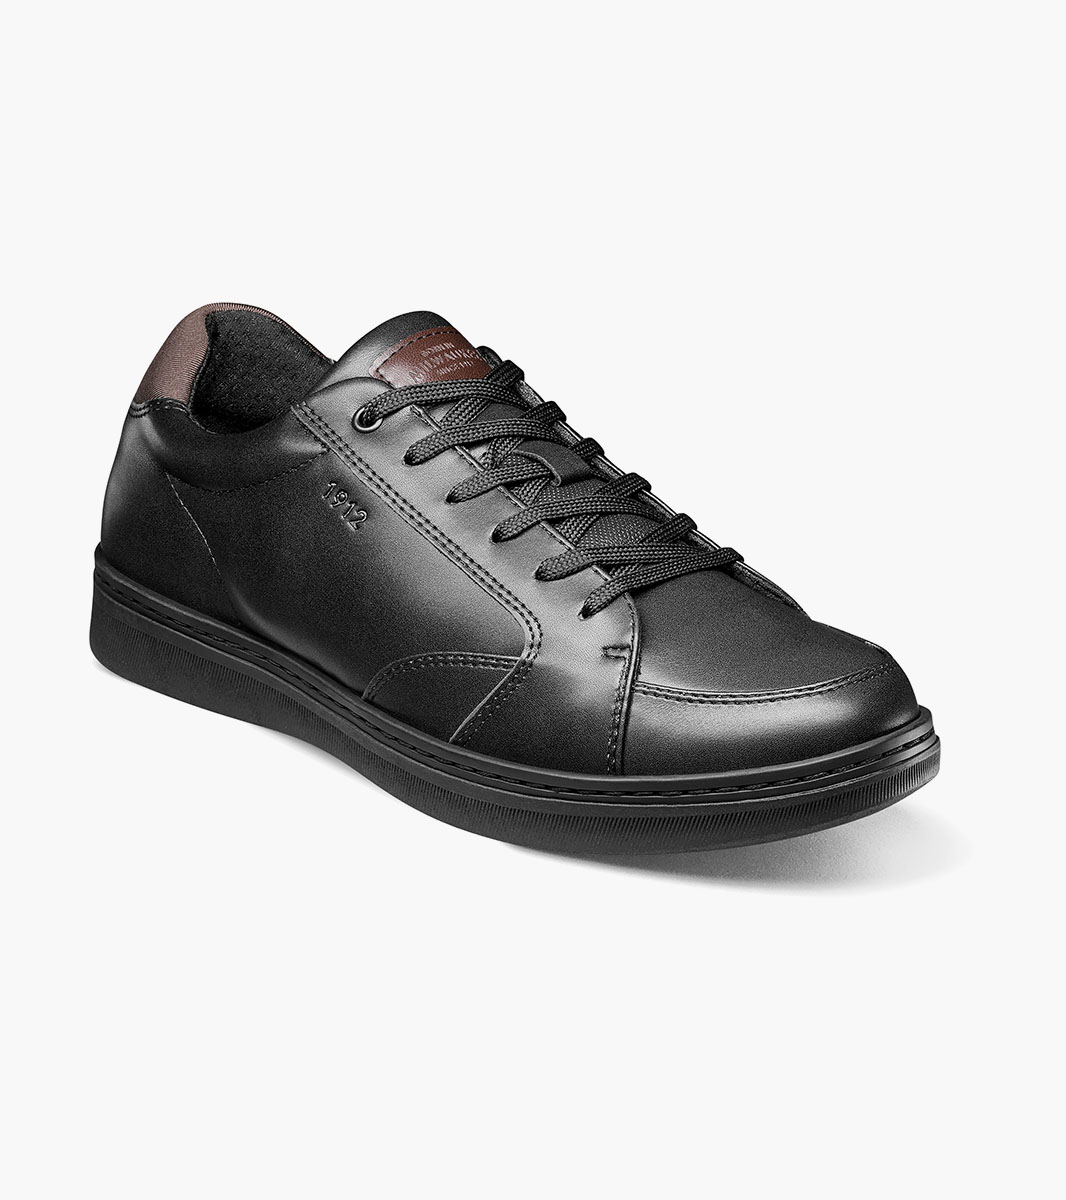 Nunn Bush Shoes Aspire Lace to Toe Oxford Black Size 8.5